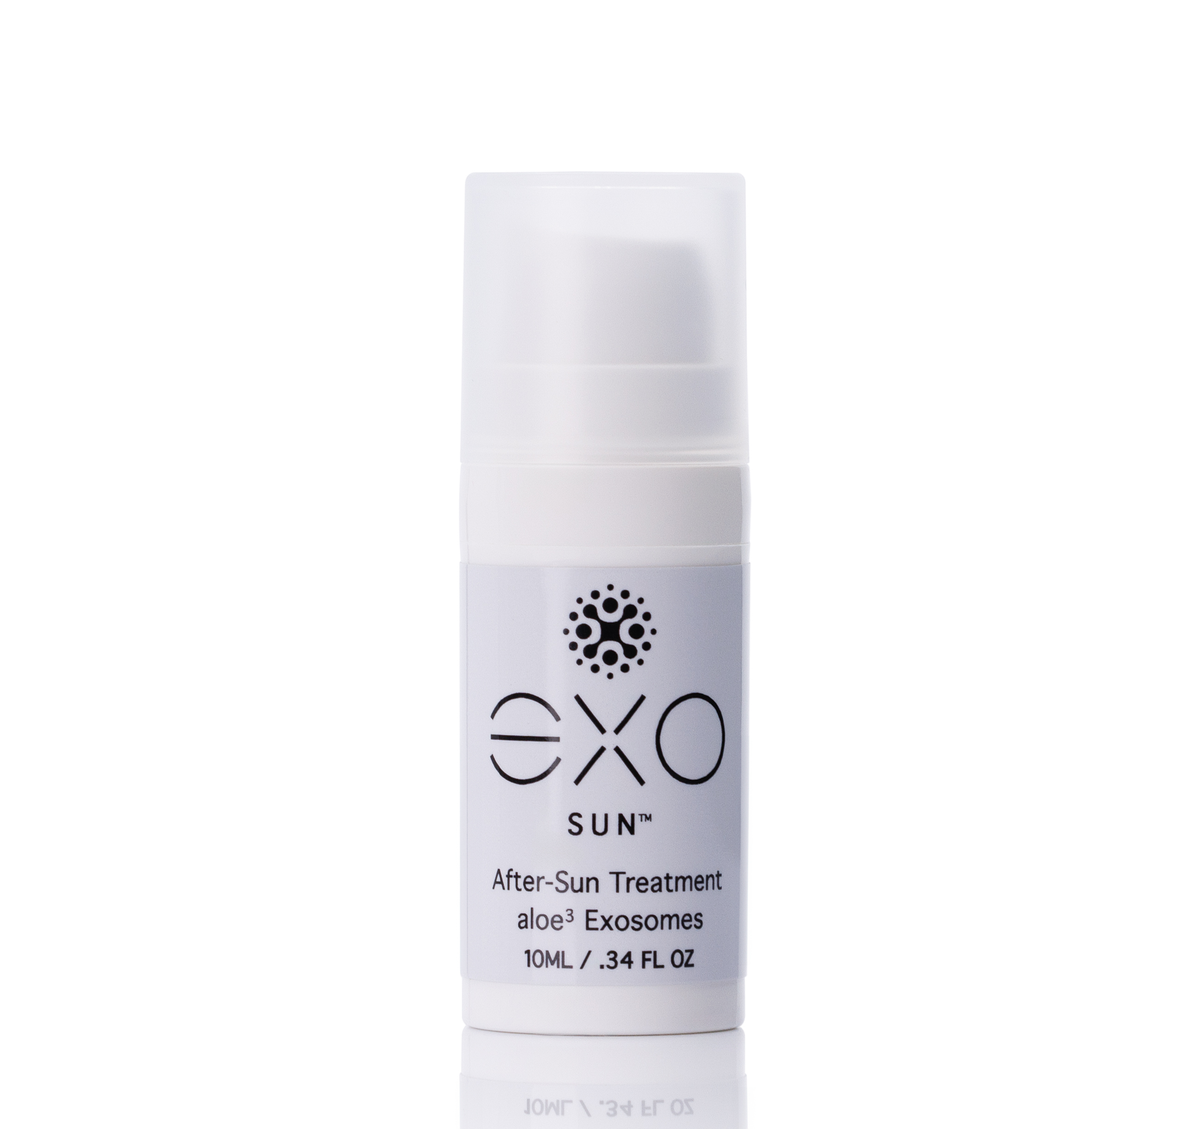 EXO SUN™ - After-Sun Treatment - Travel Size, 4 bottles - 10ML / .34 fl oz  (x4)